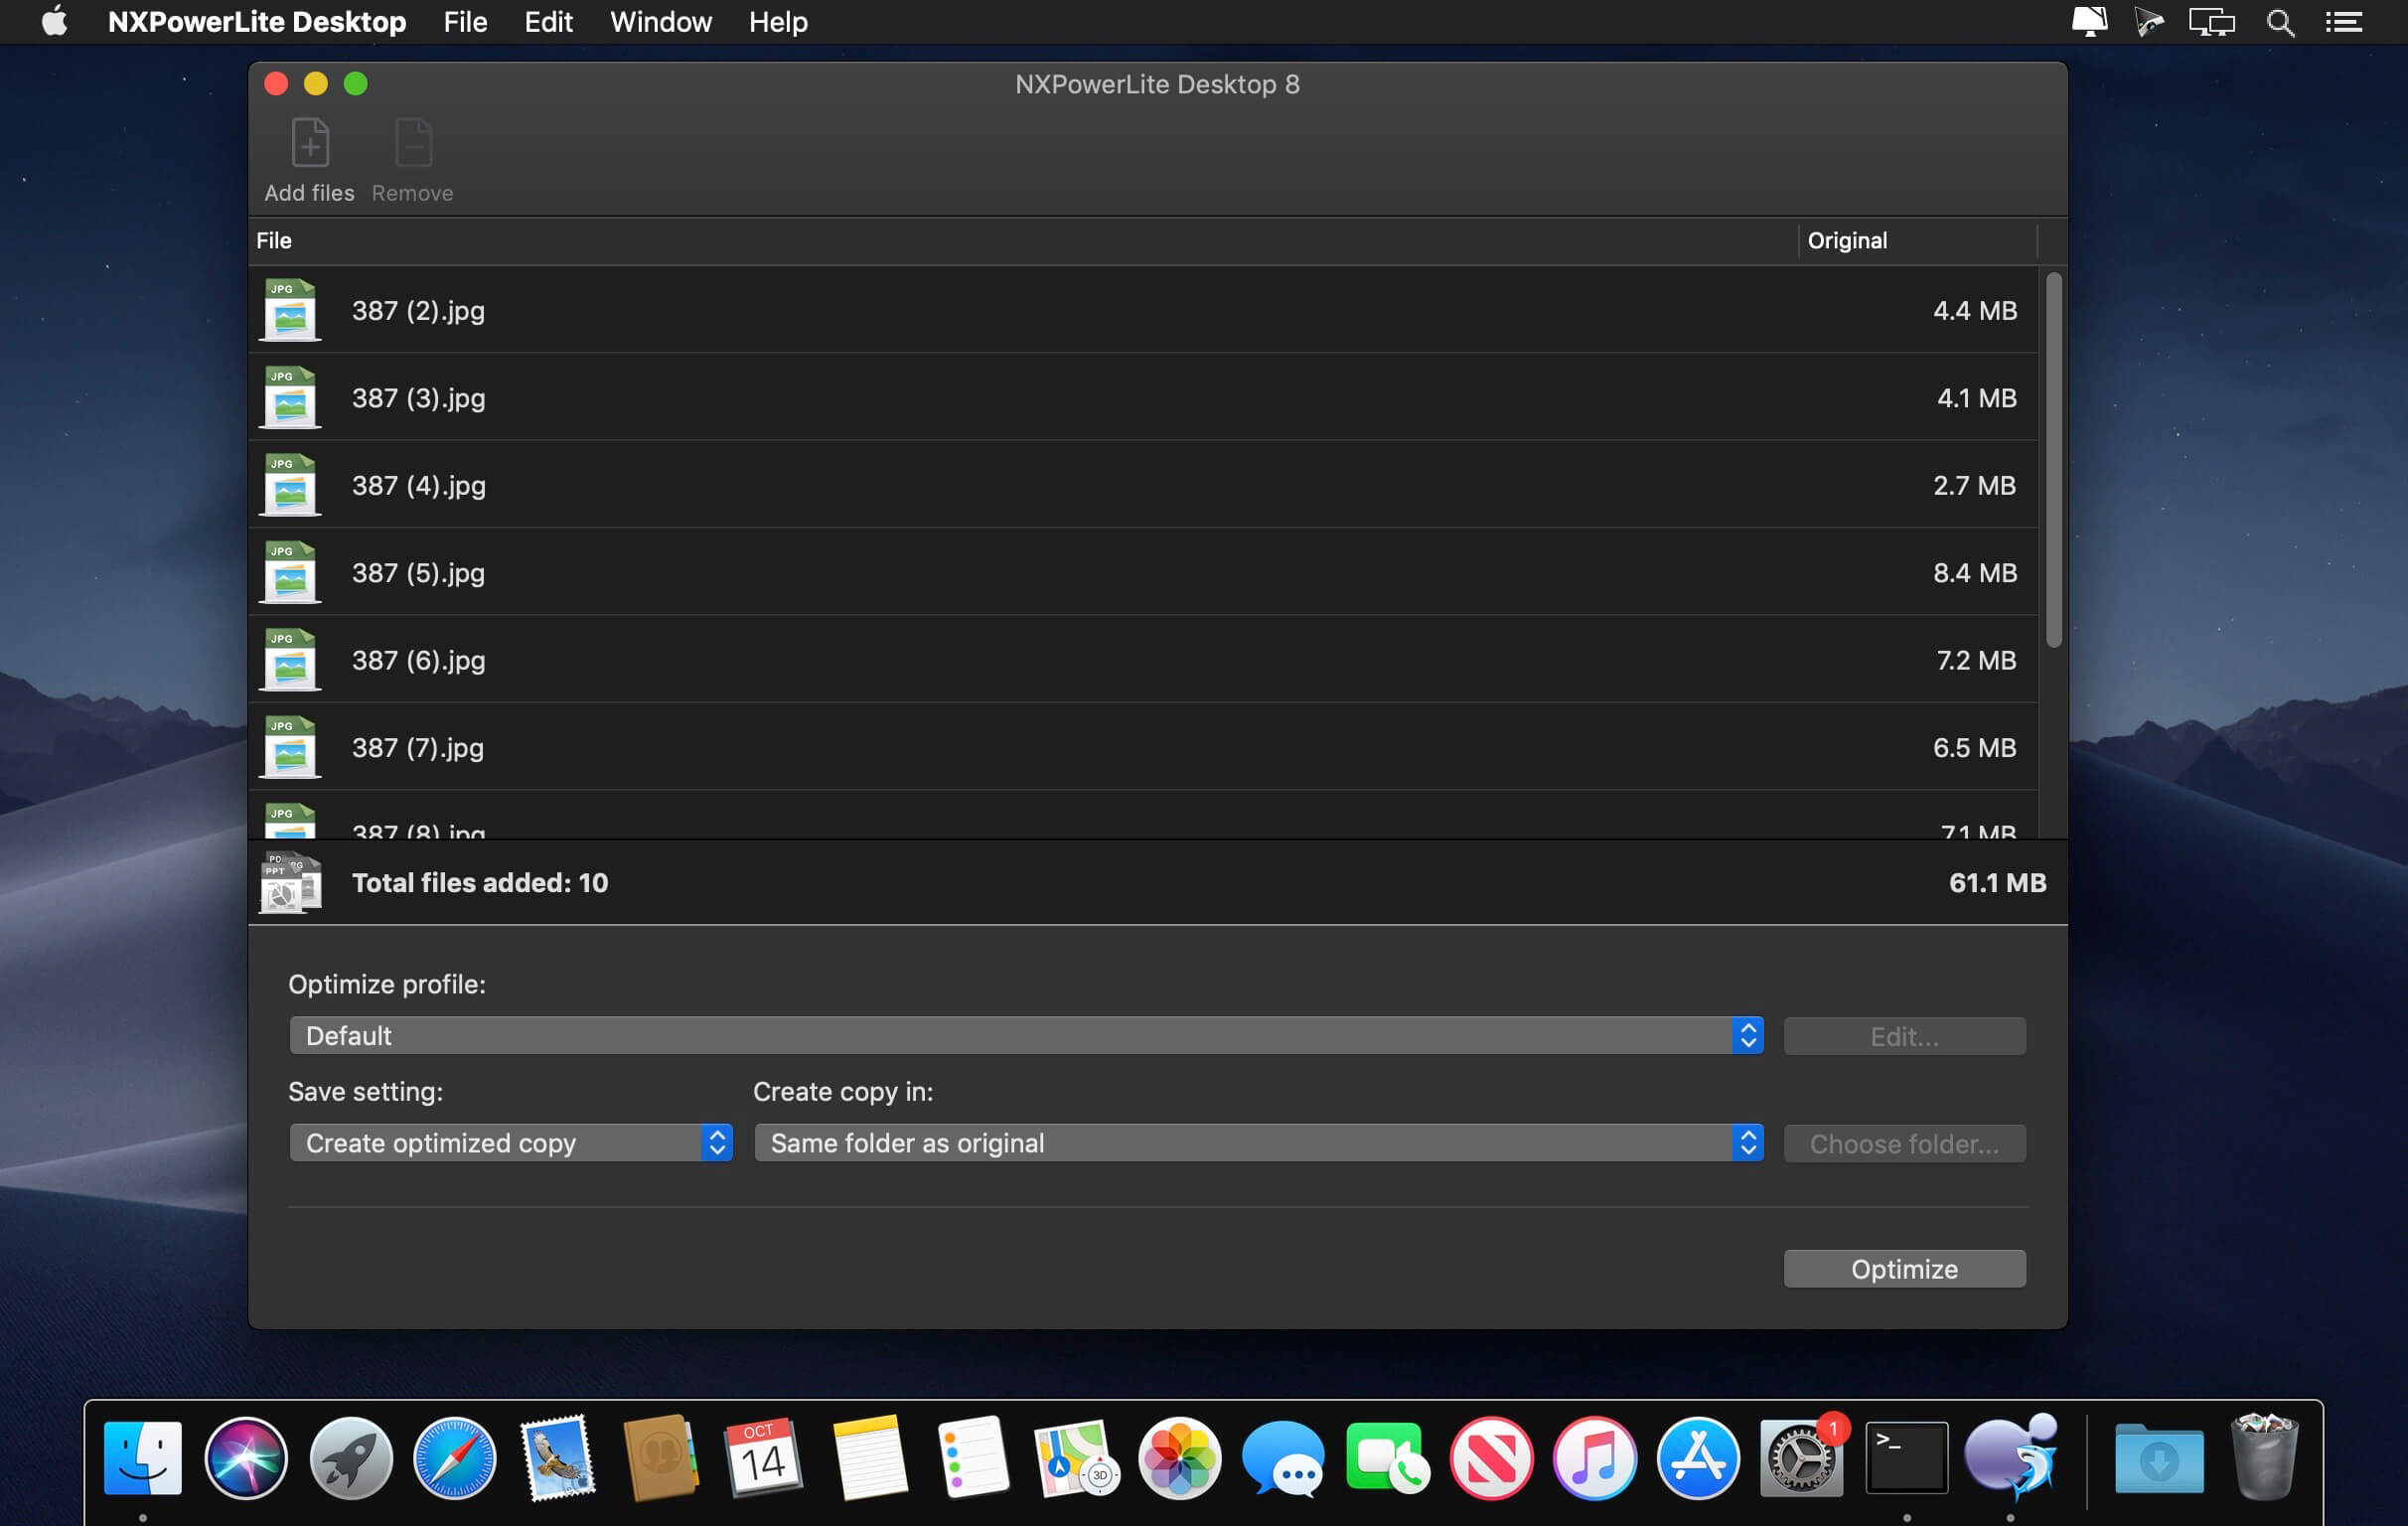 NXPowerLite Desktop 10.0.1 instal the new for apple